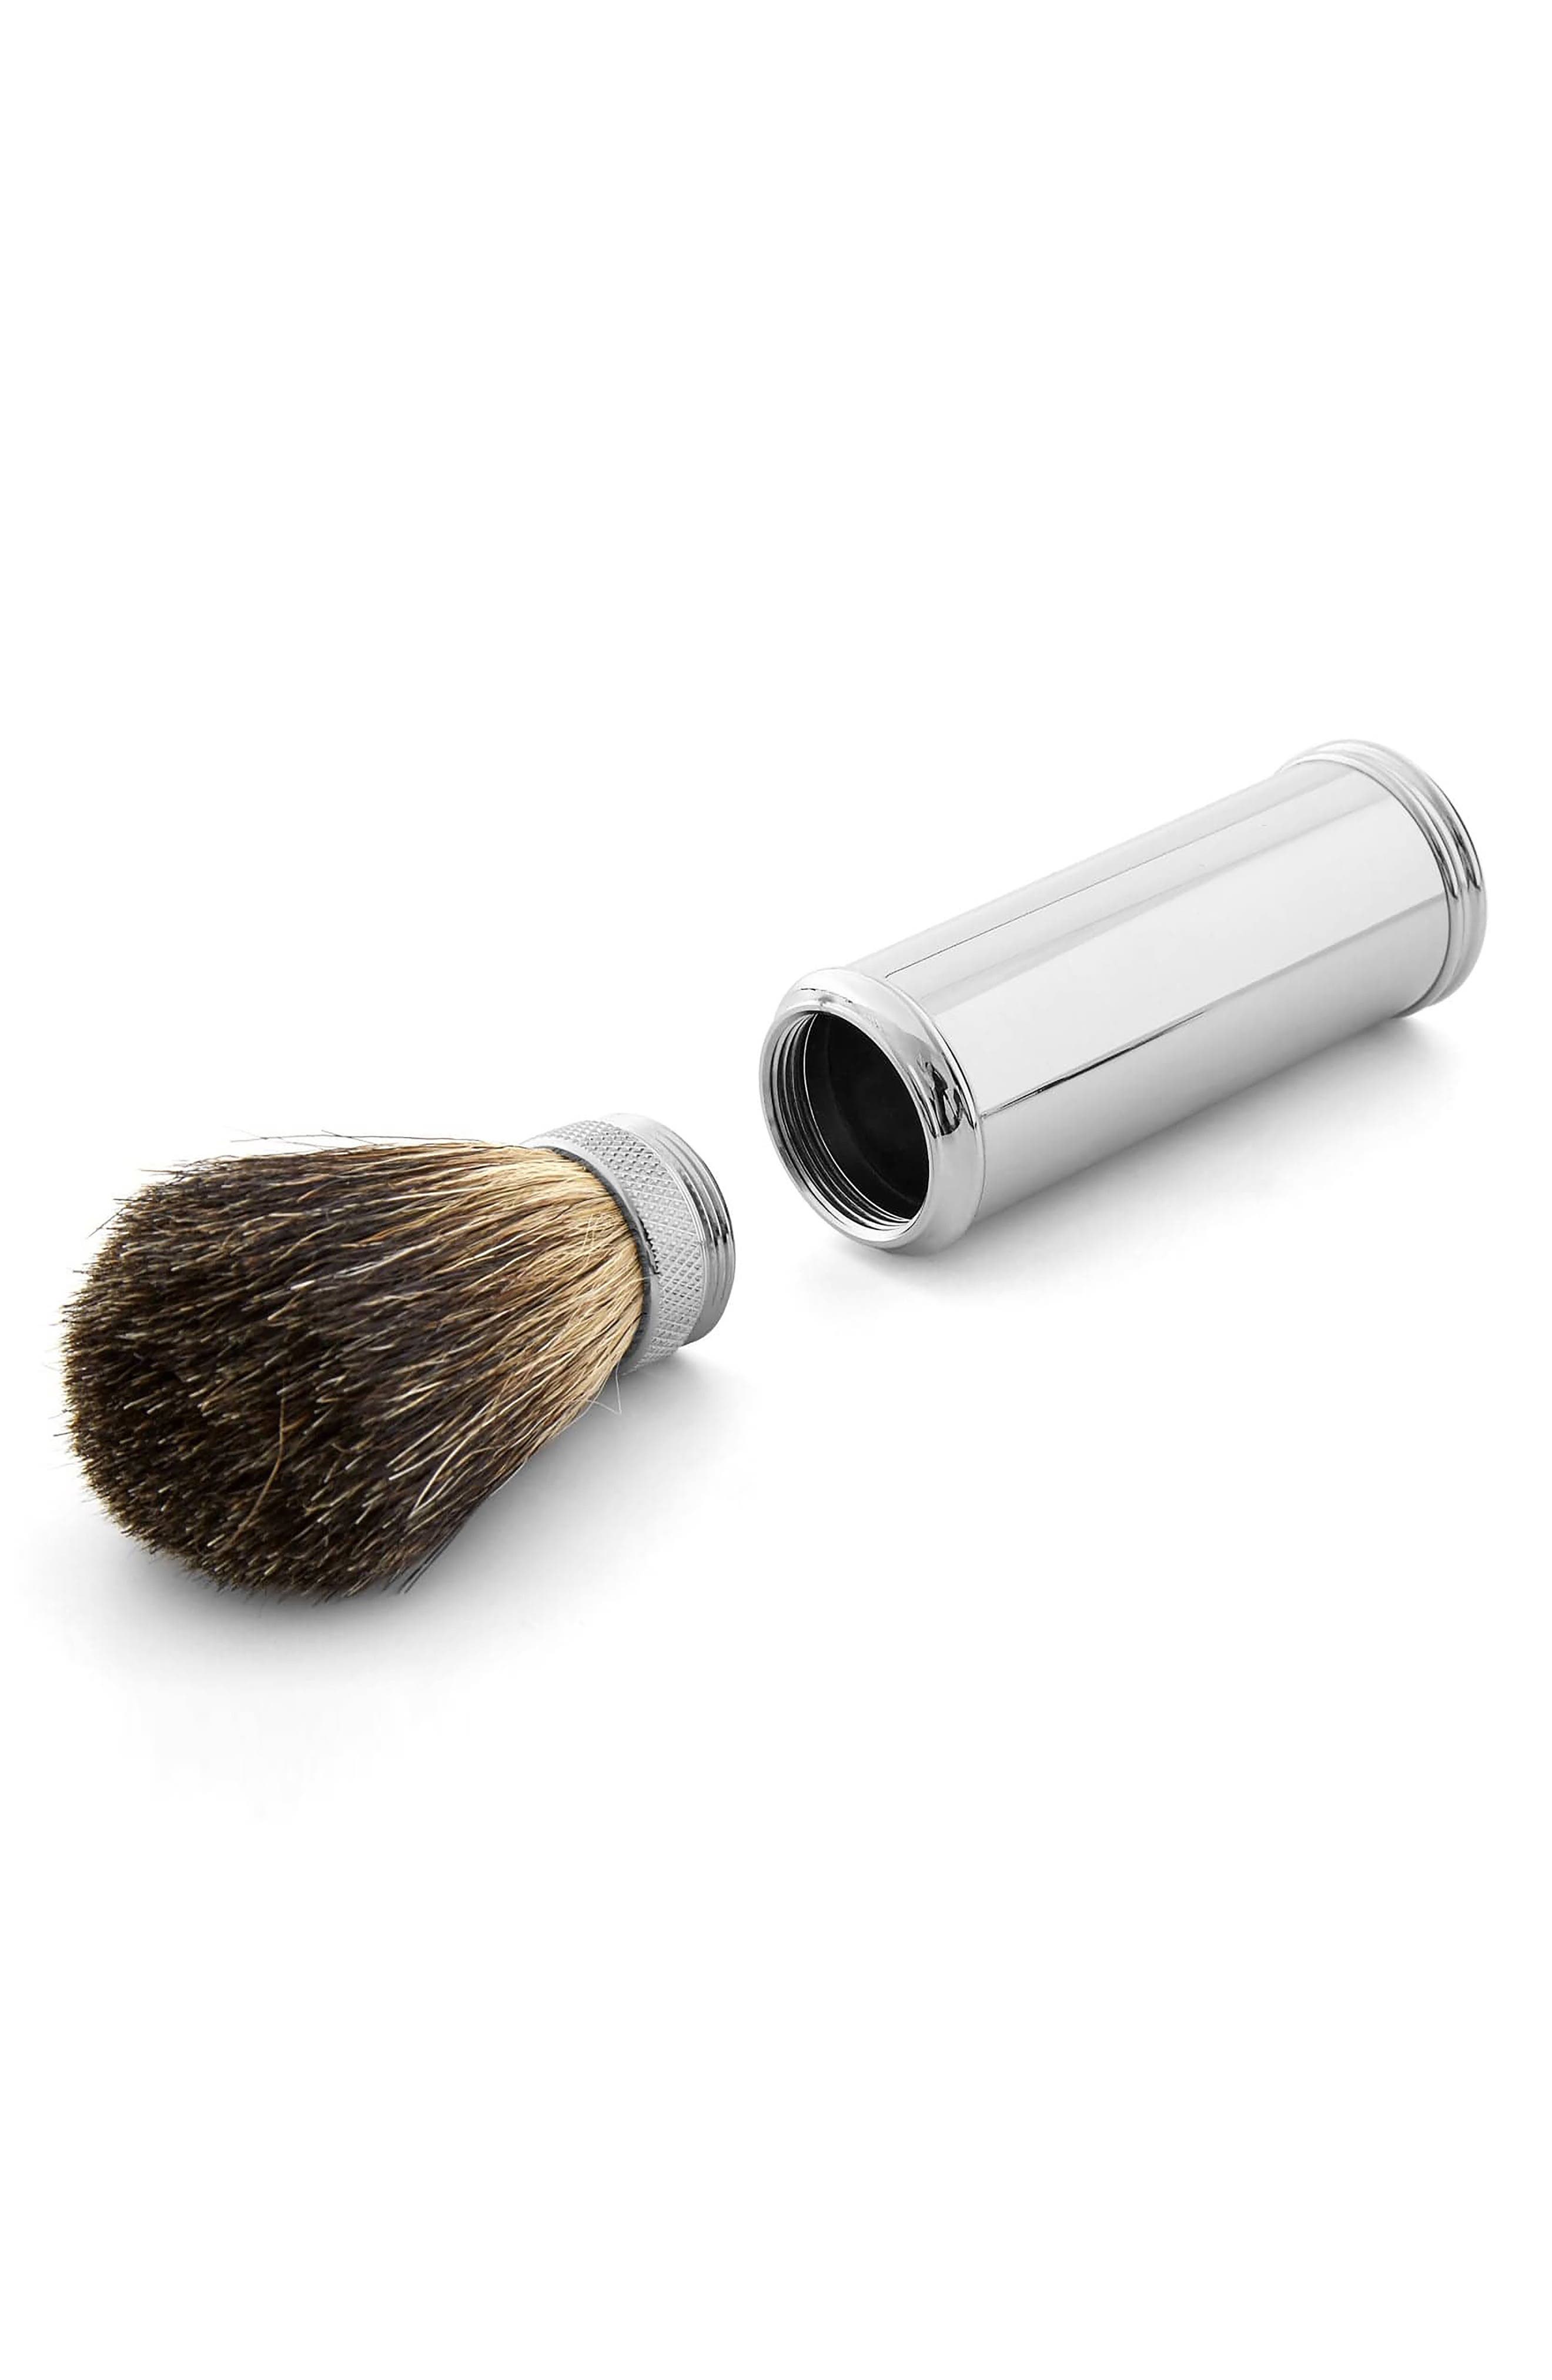 Razor Md Chrome 21 Travel Shave Brush